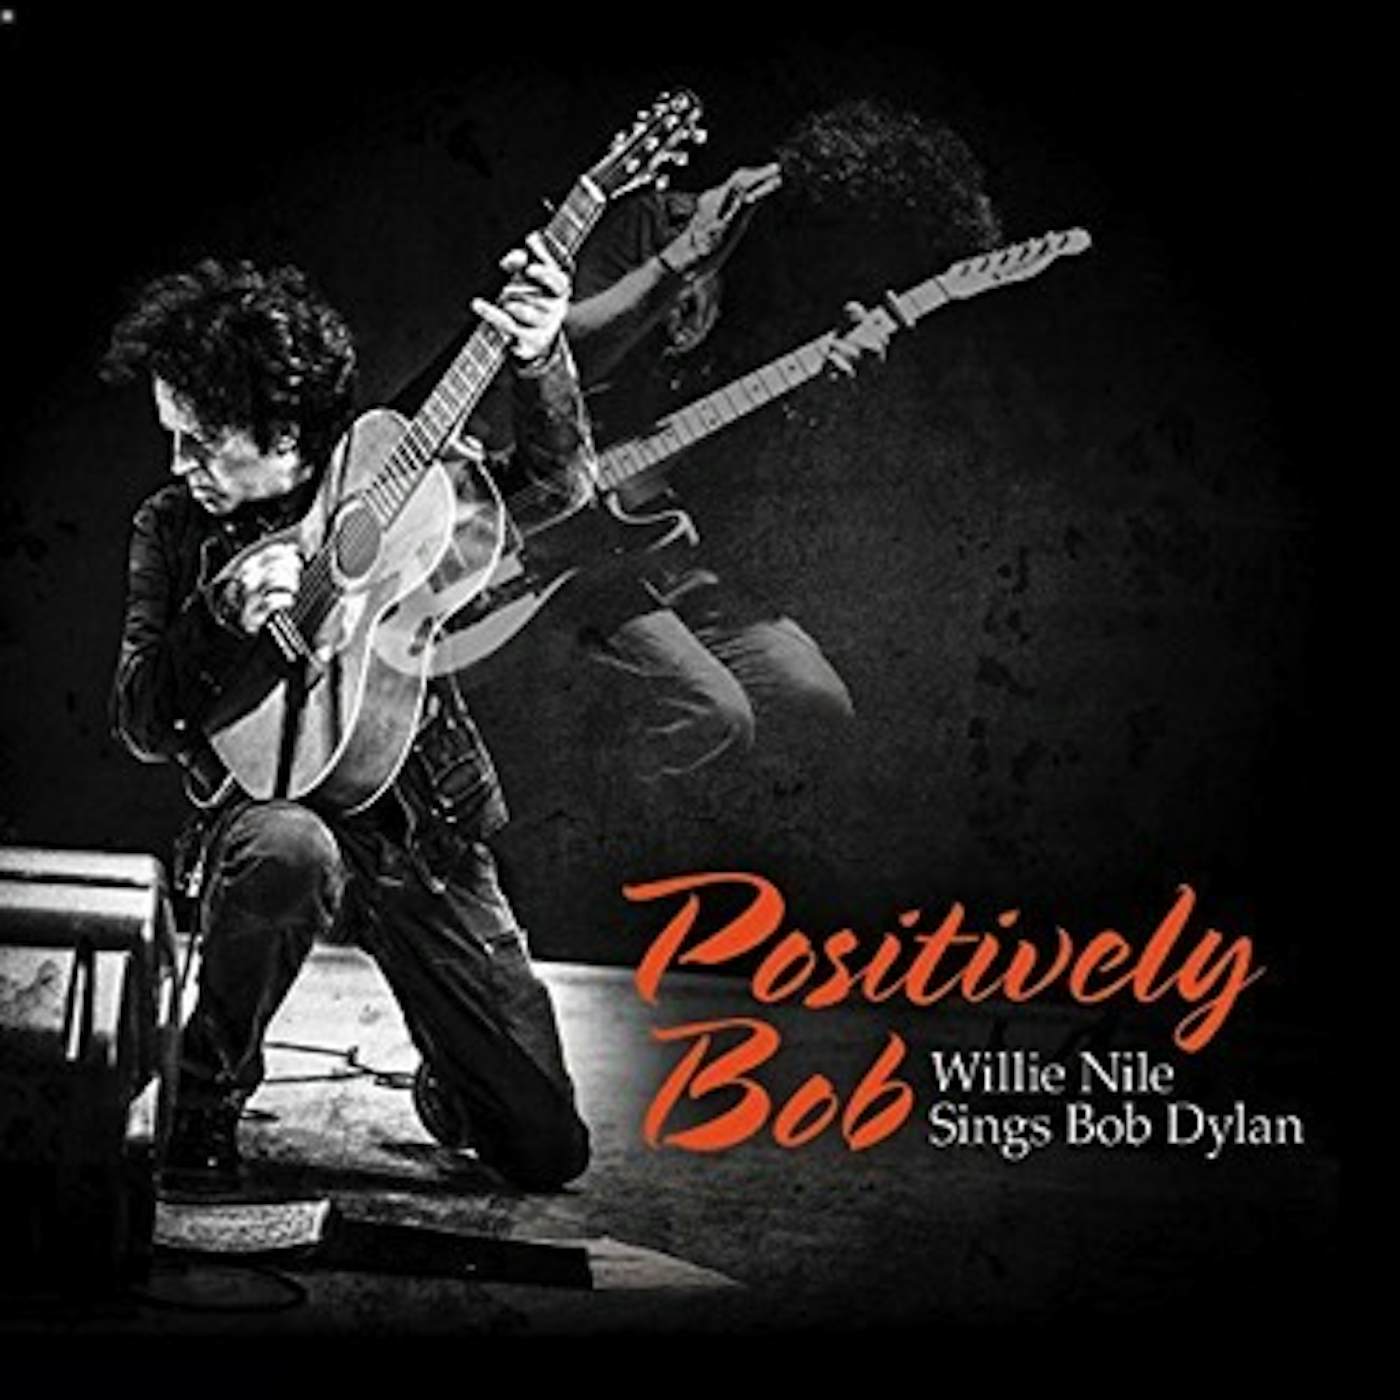 Positively Bob: Willie Nile Sings Bob Dylan Vinyl Record